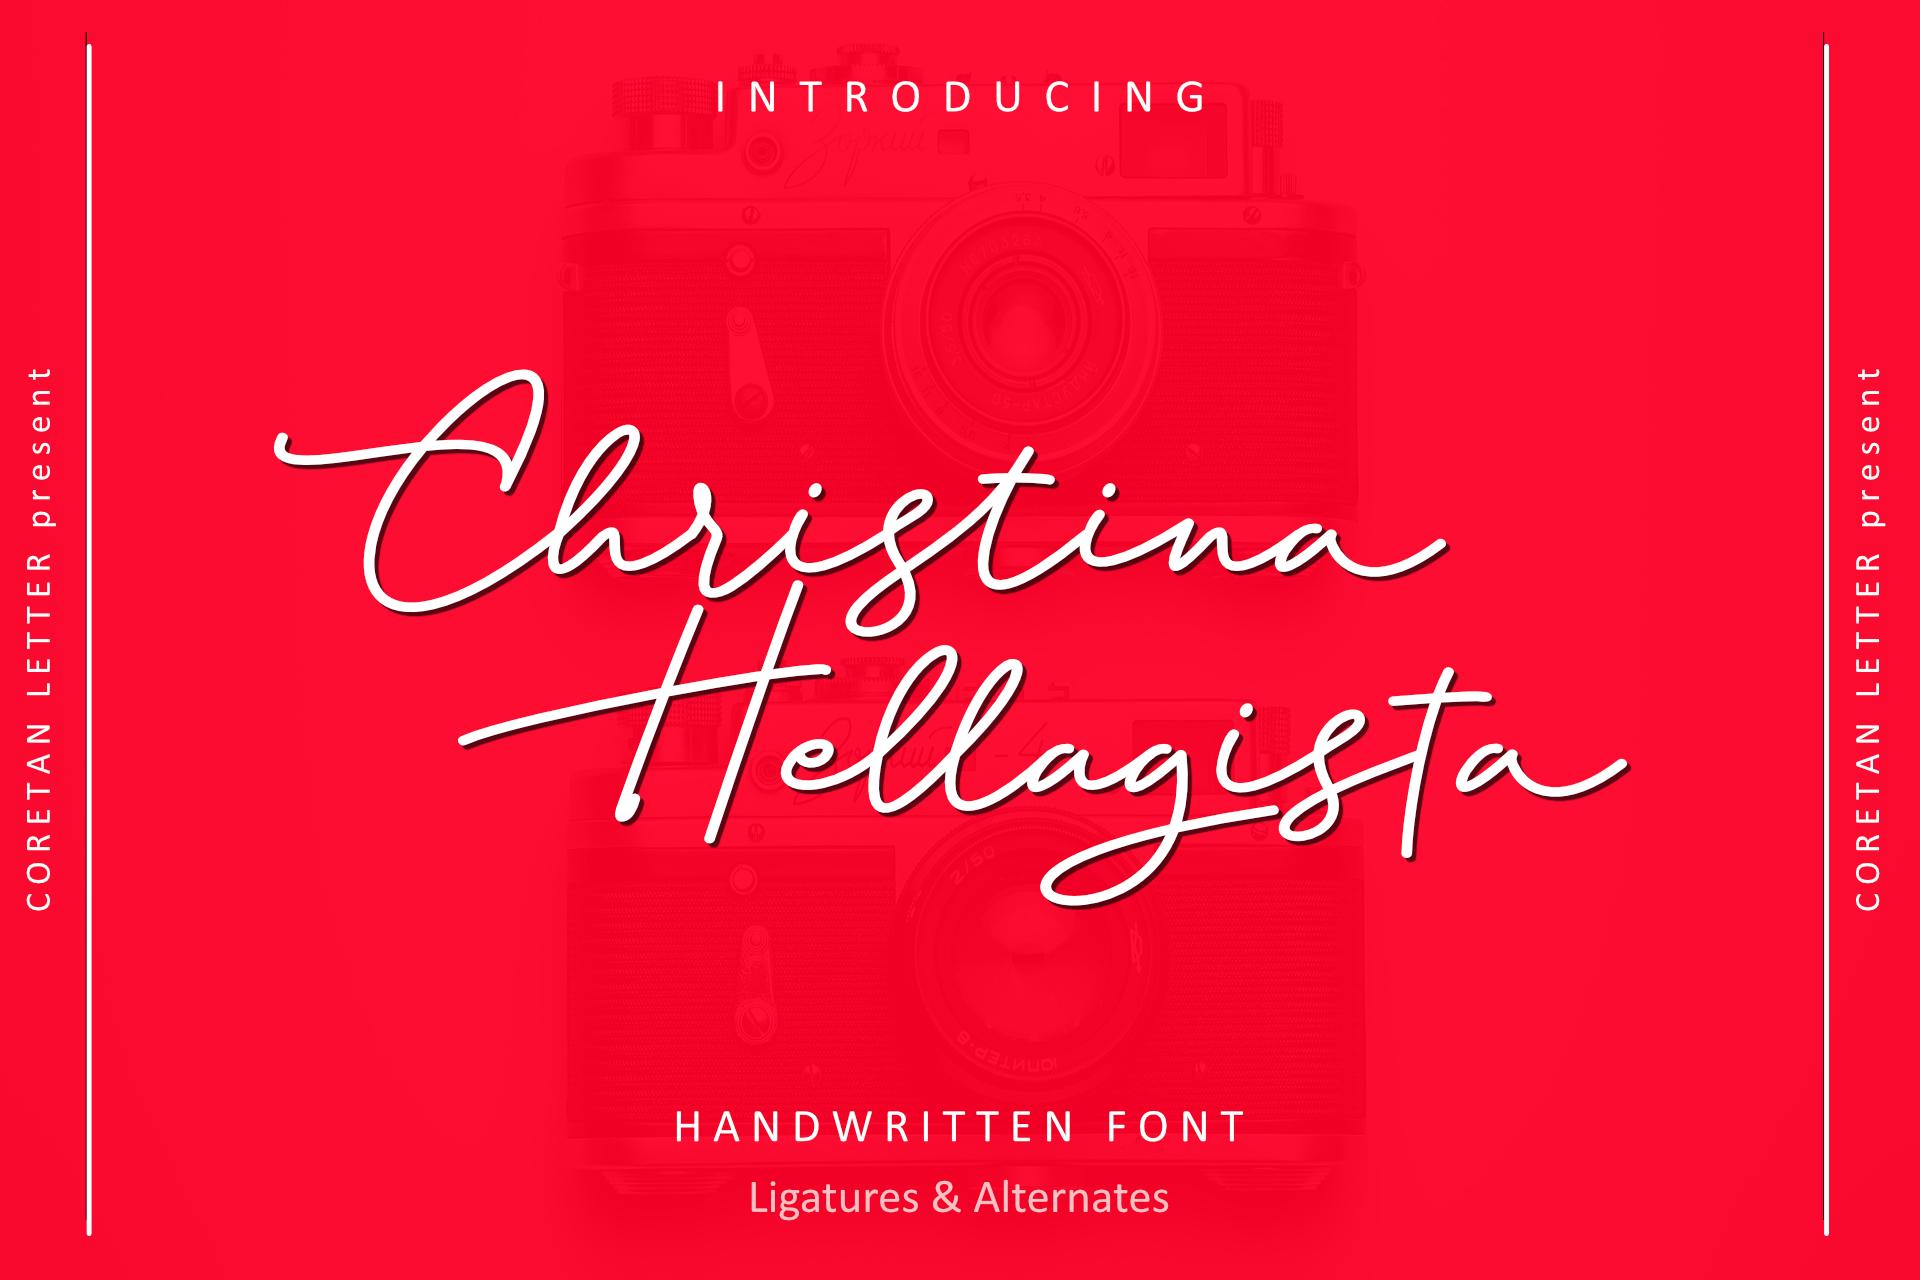 Christina Hellagista Font